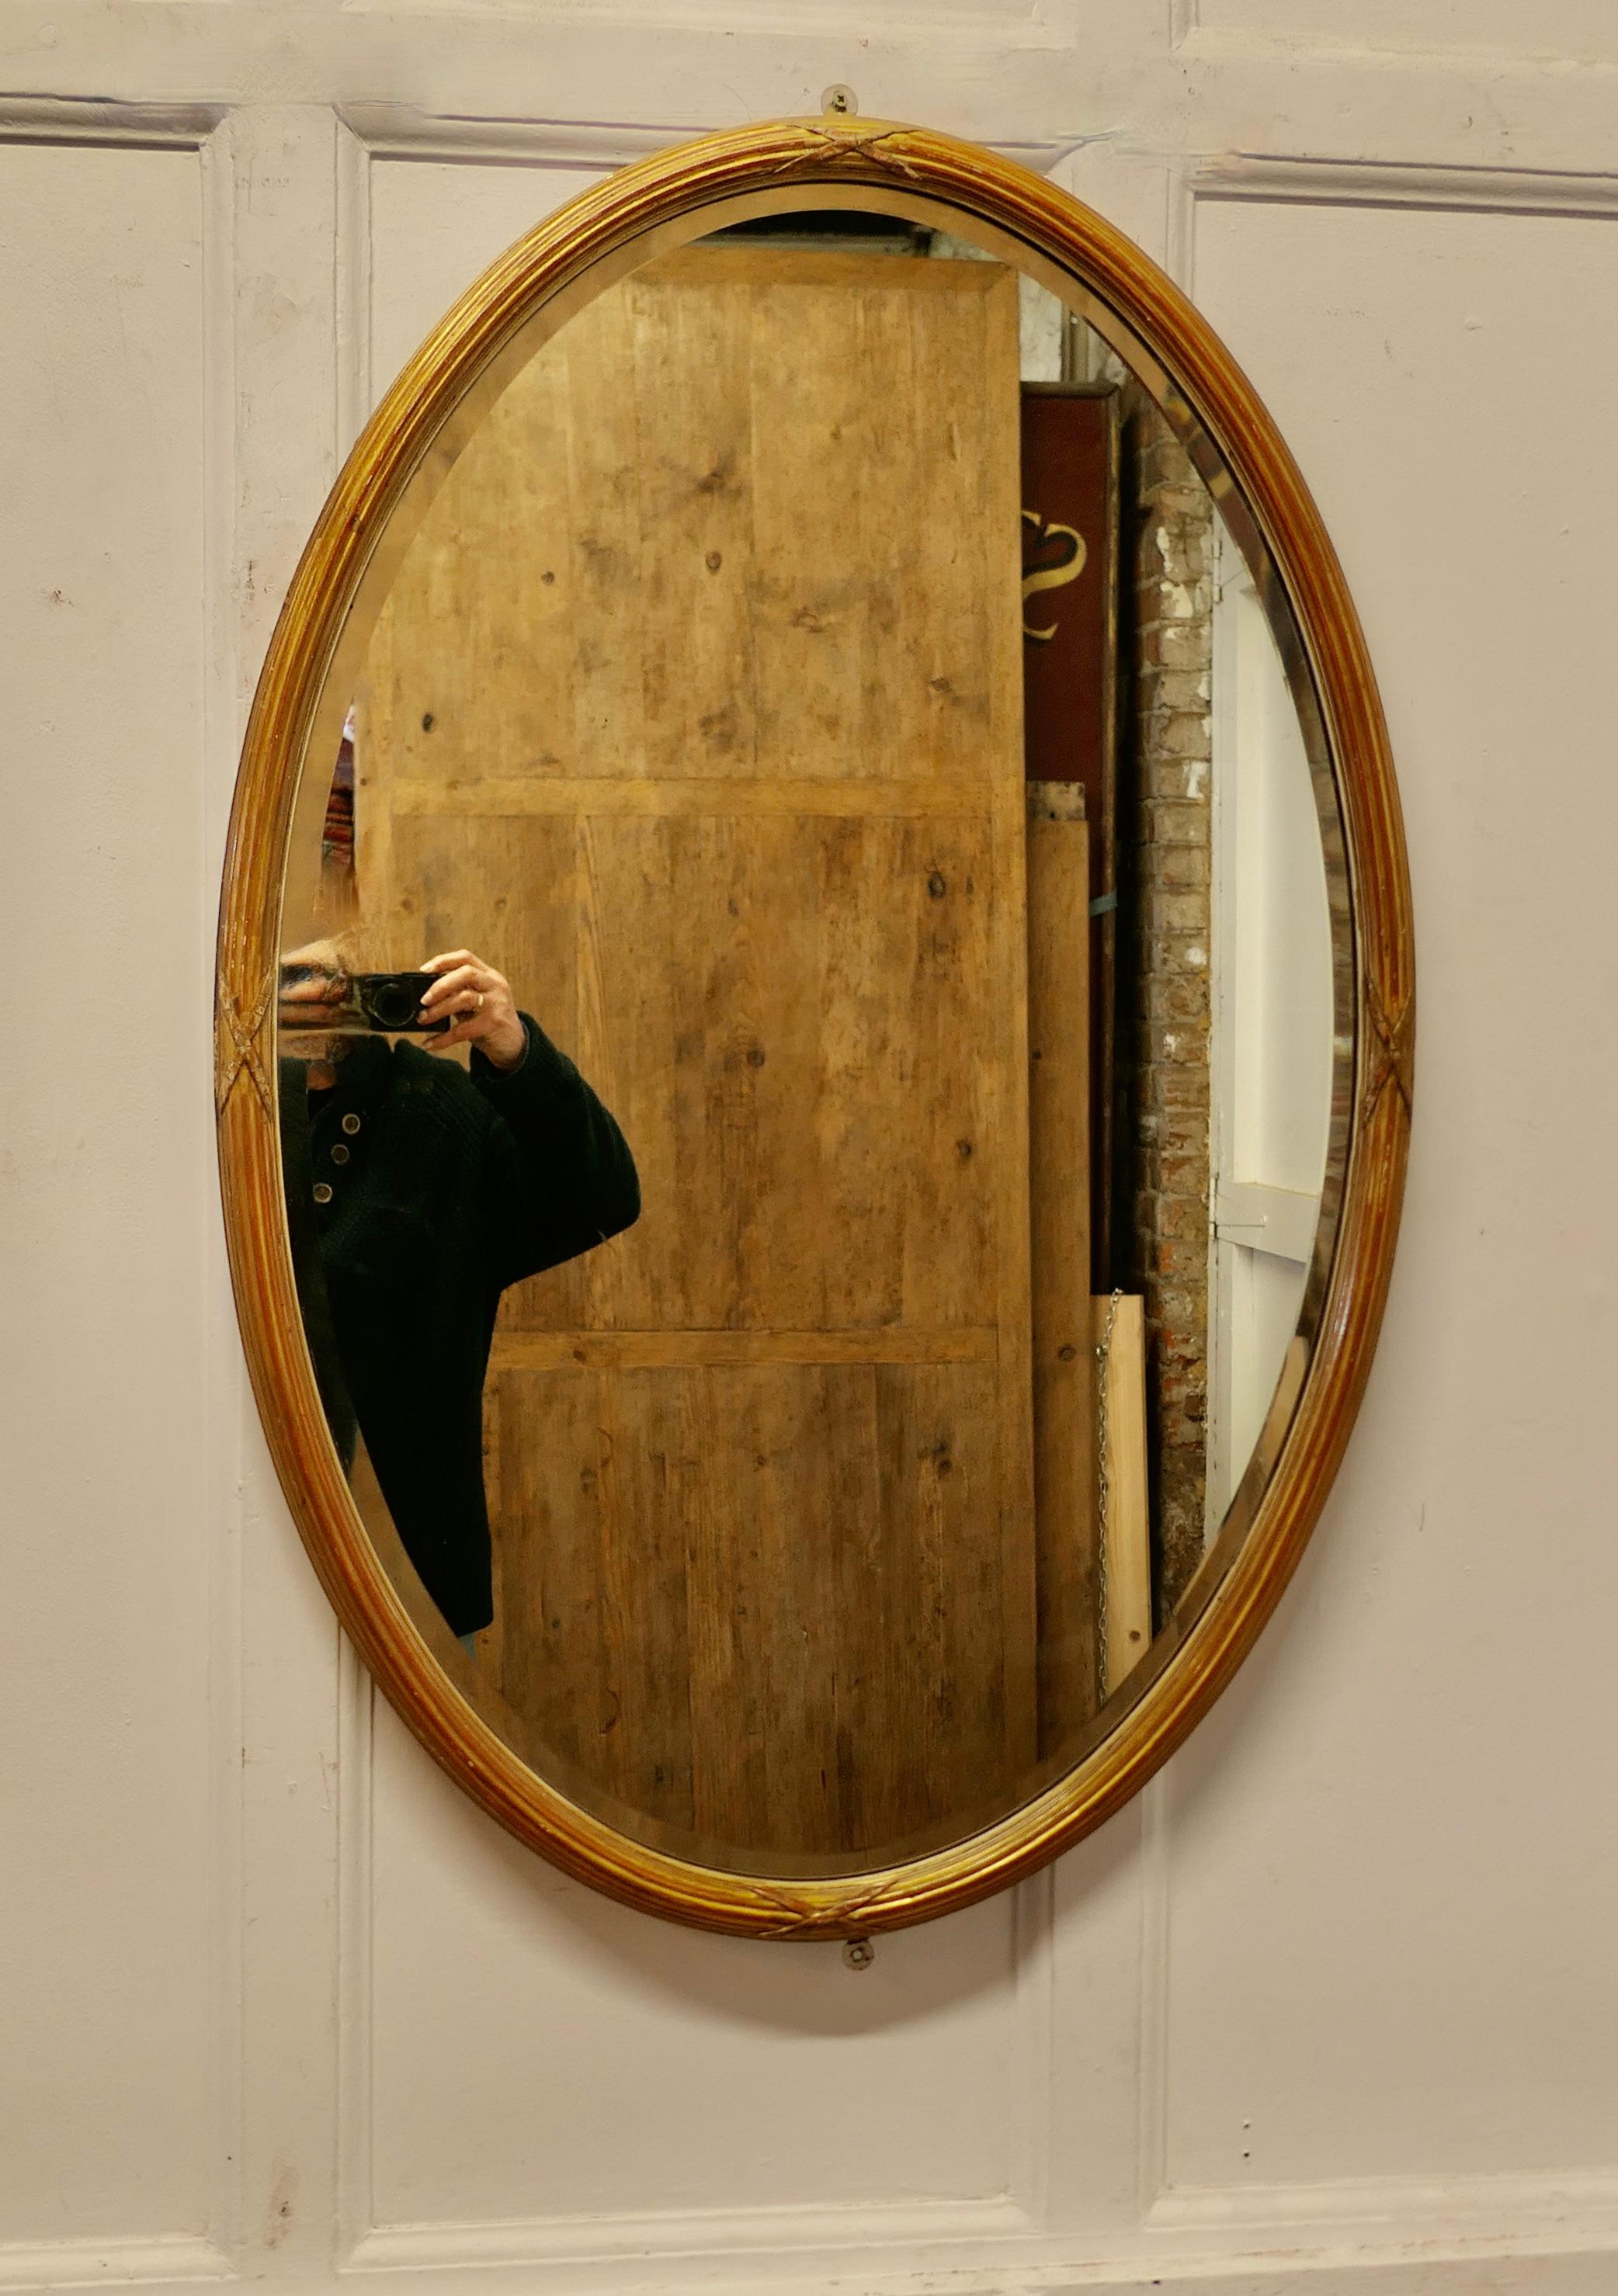 Grand miroir ovale italien doré

Ce miroir a un cadre ovale moulé de 1,5